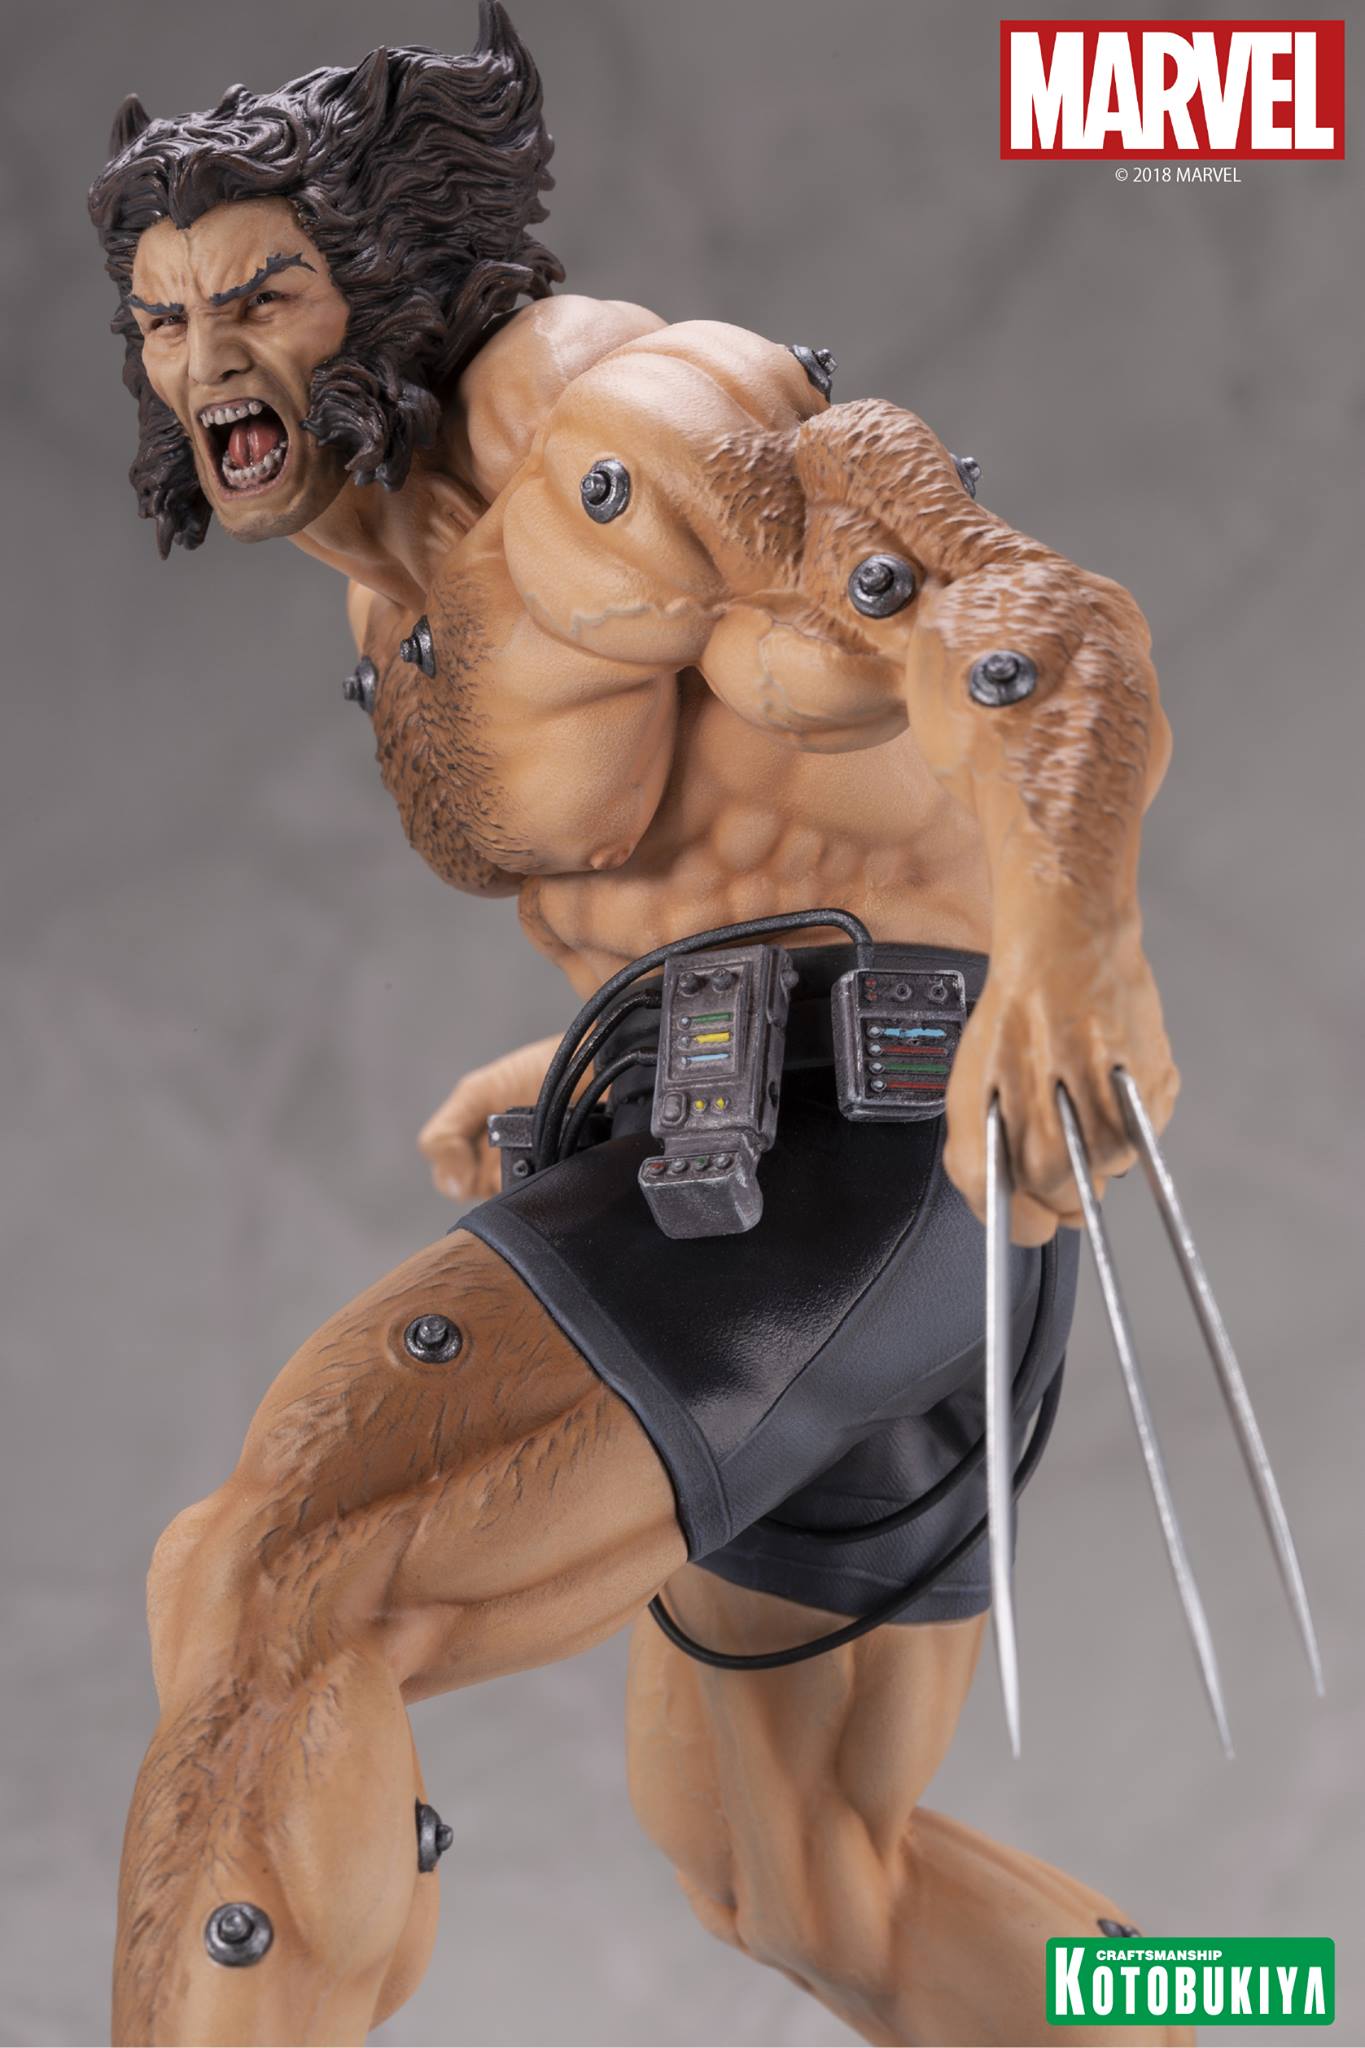 Kotobukiya Weapon X Wolverine Fine Arts Statue Up for Order 